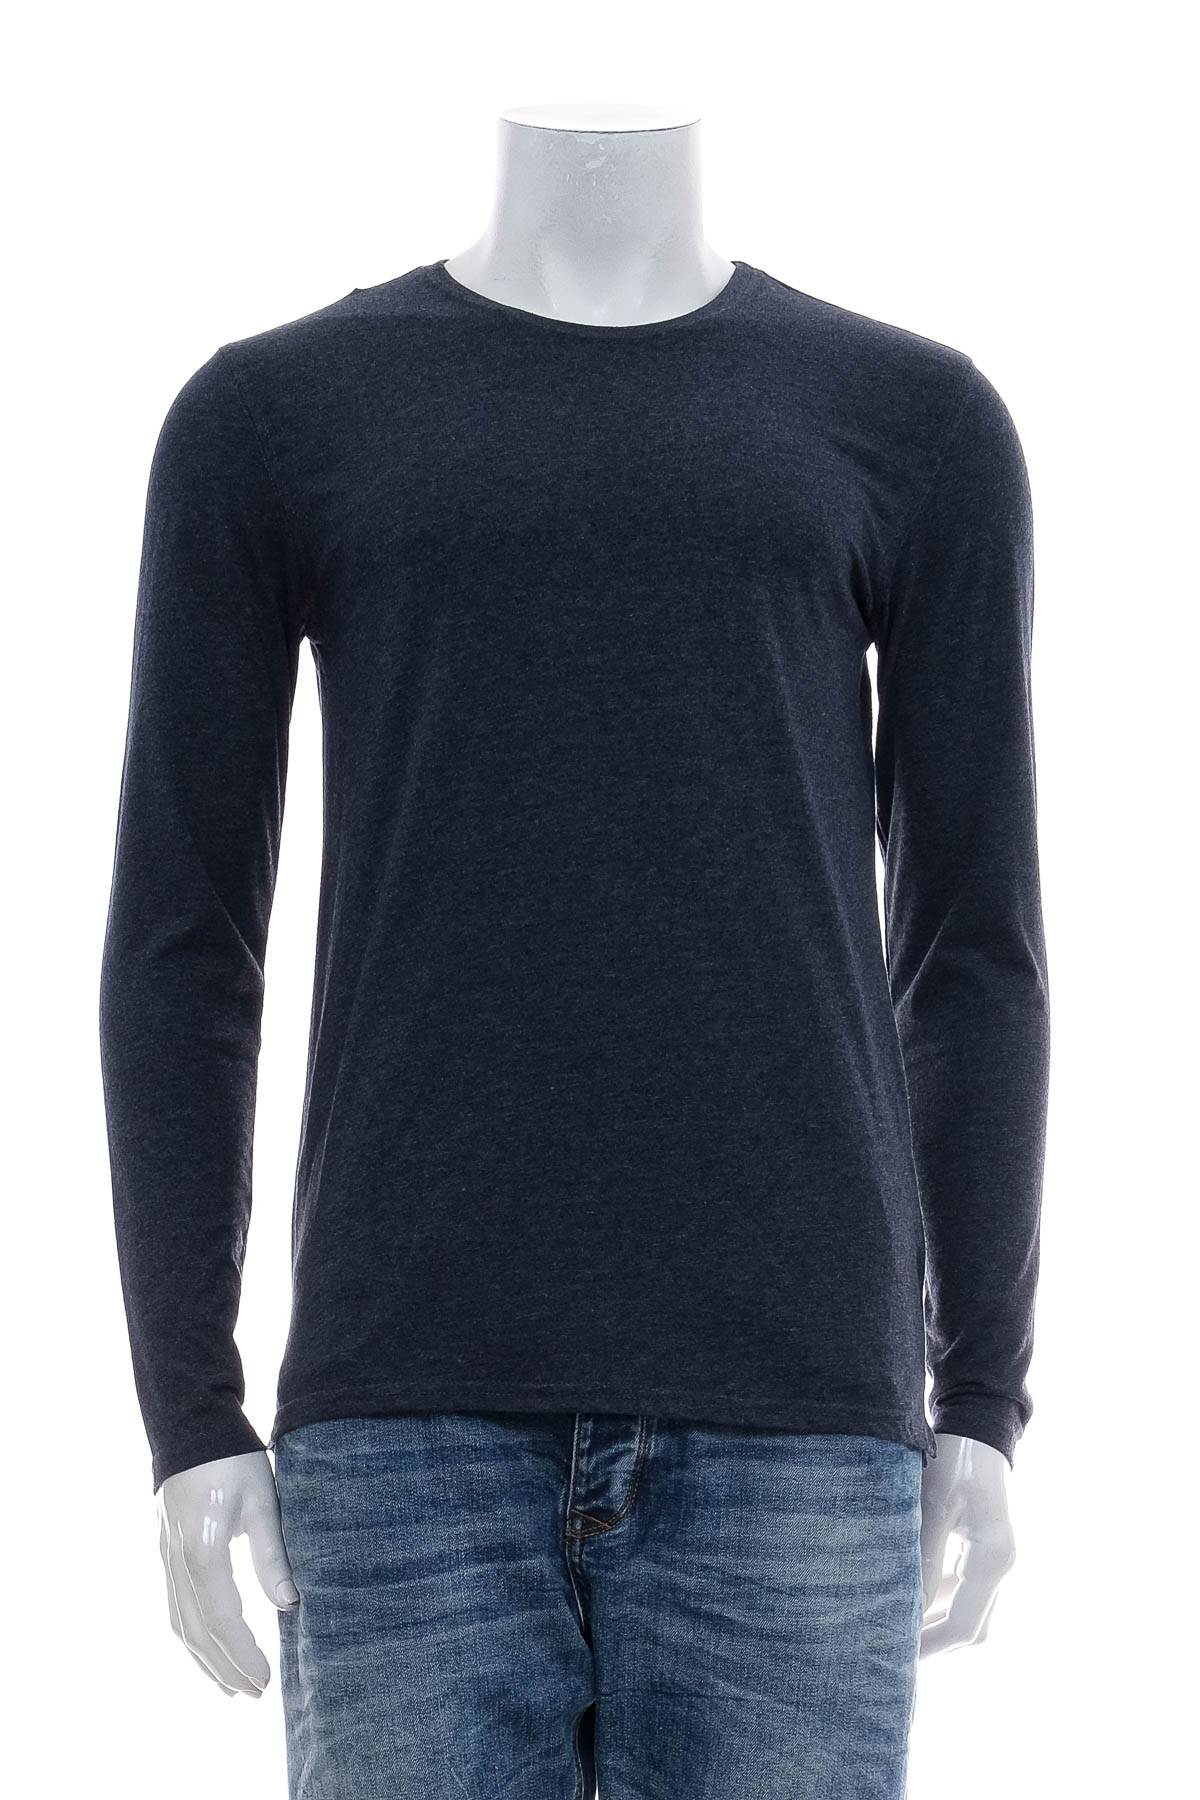 Men's sweater - Jean Pascale - 0